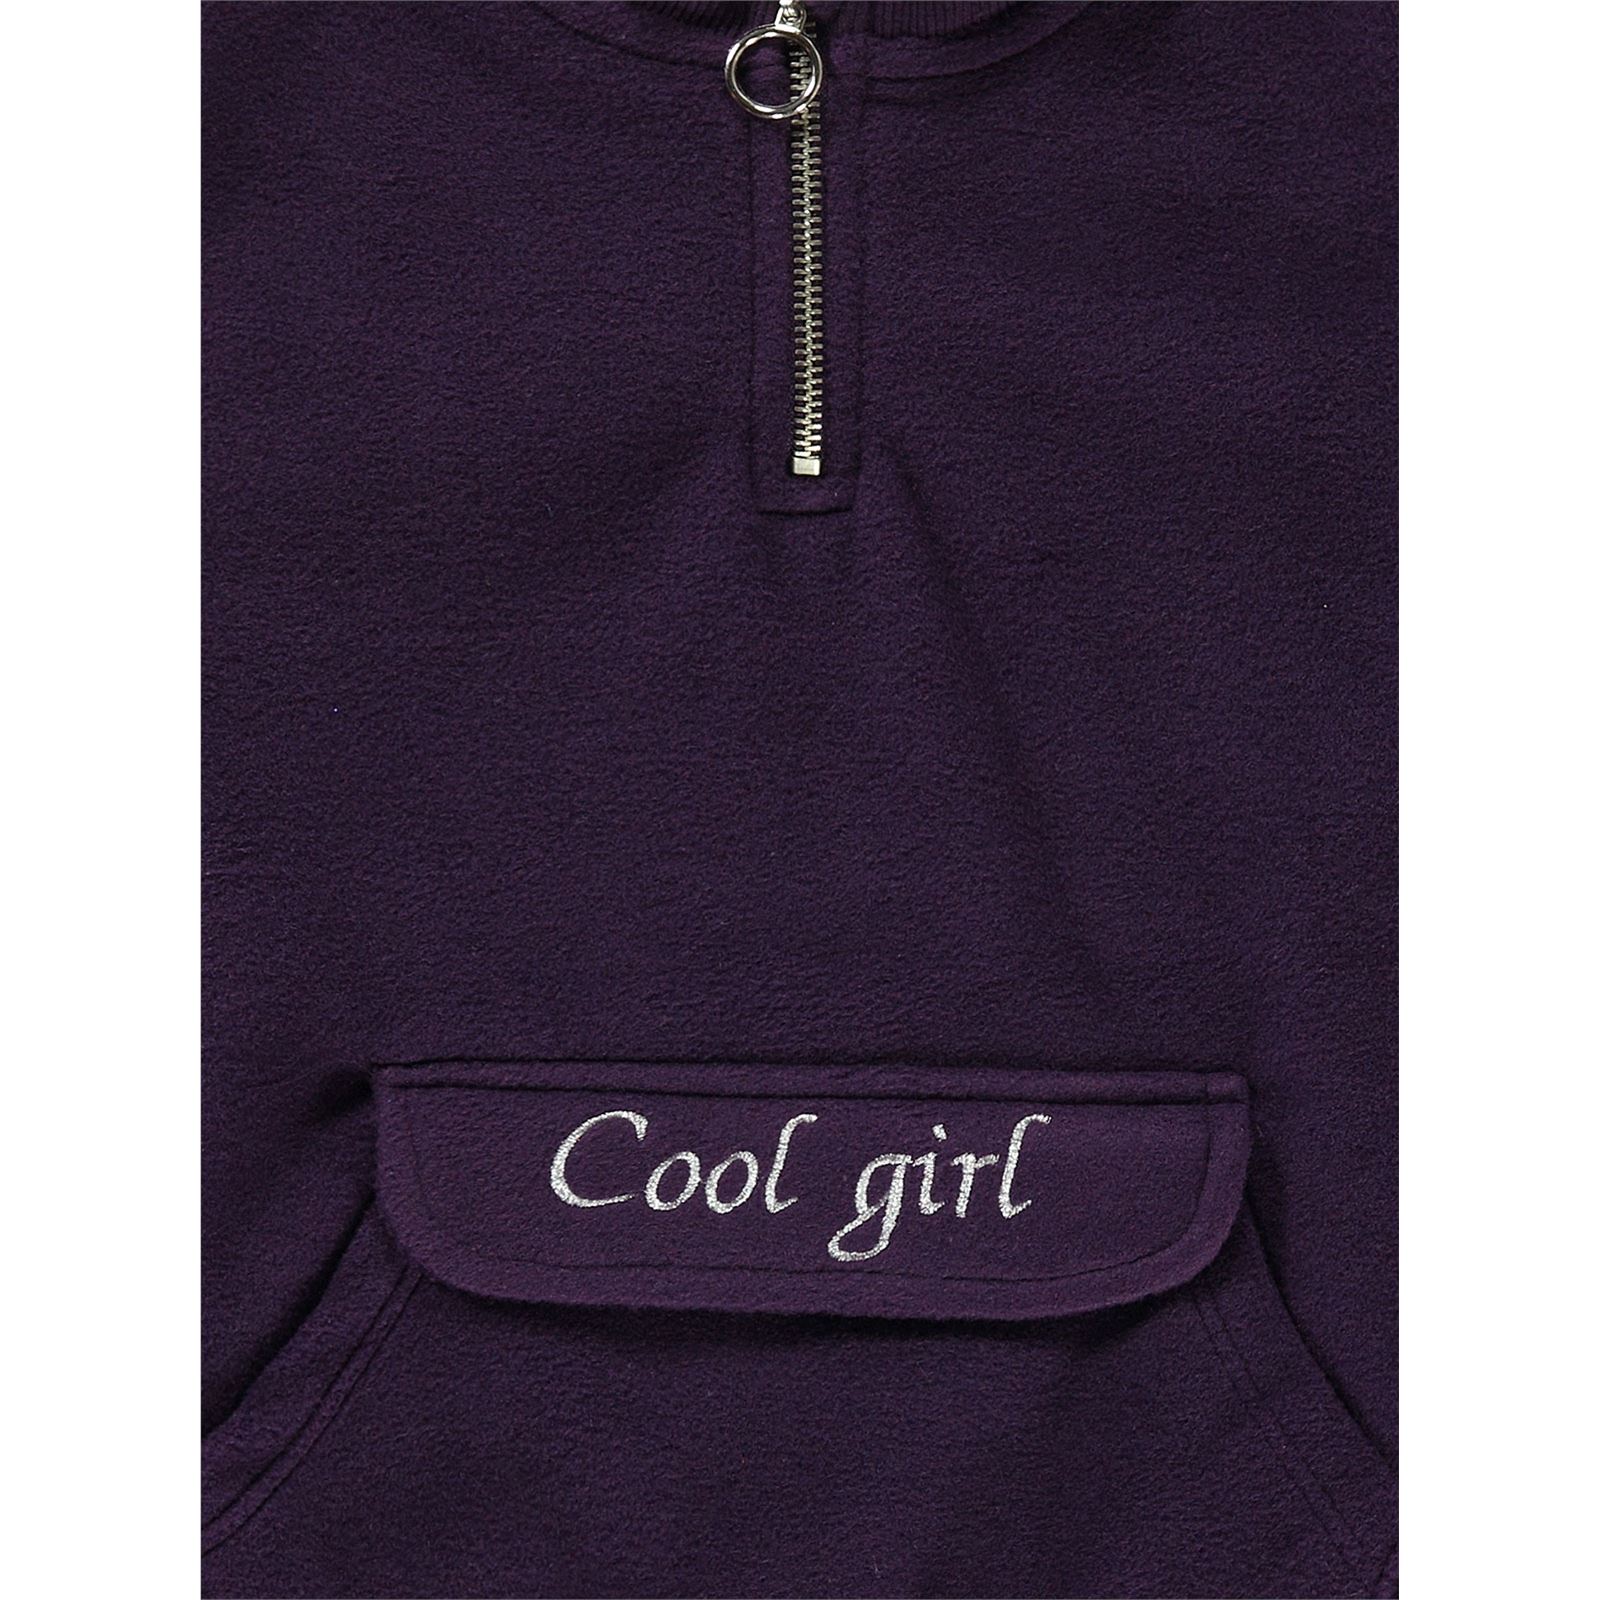 Civil Girls Kız Çocuk Sweatshirt 6-9 Yaş Mor